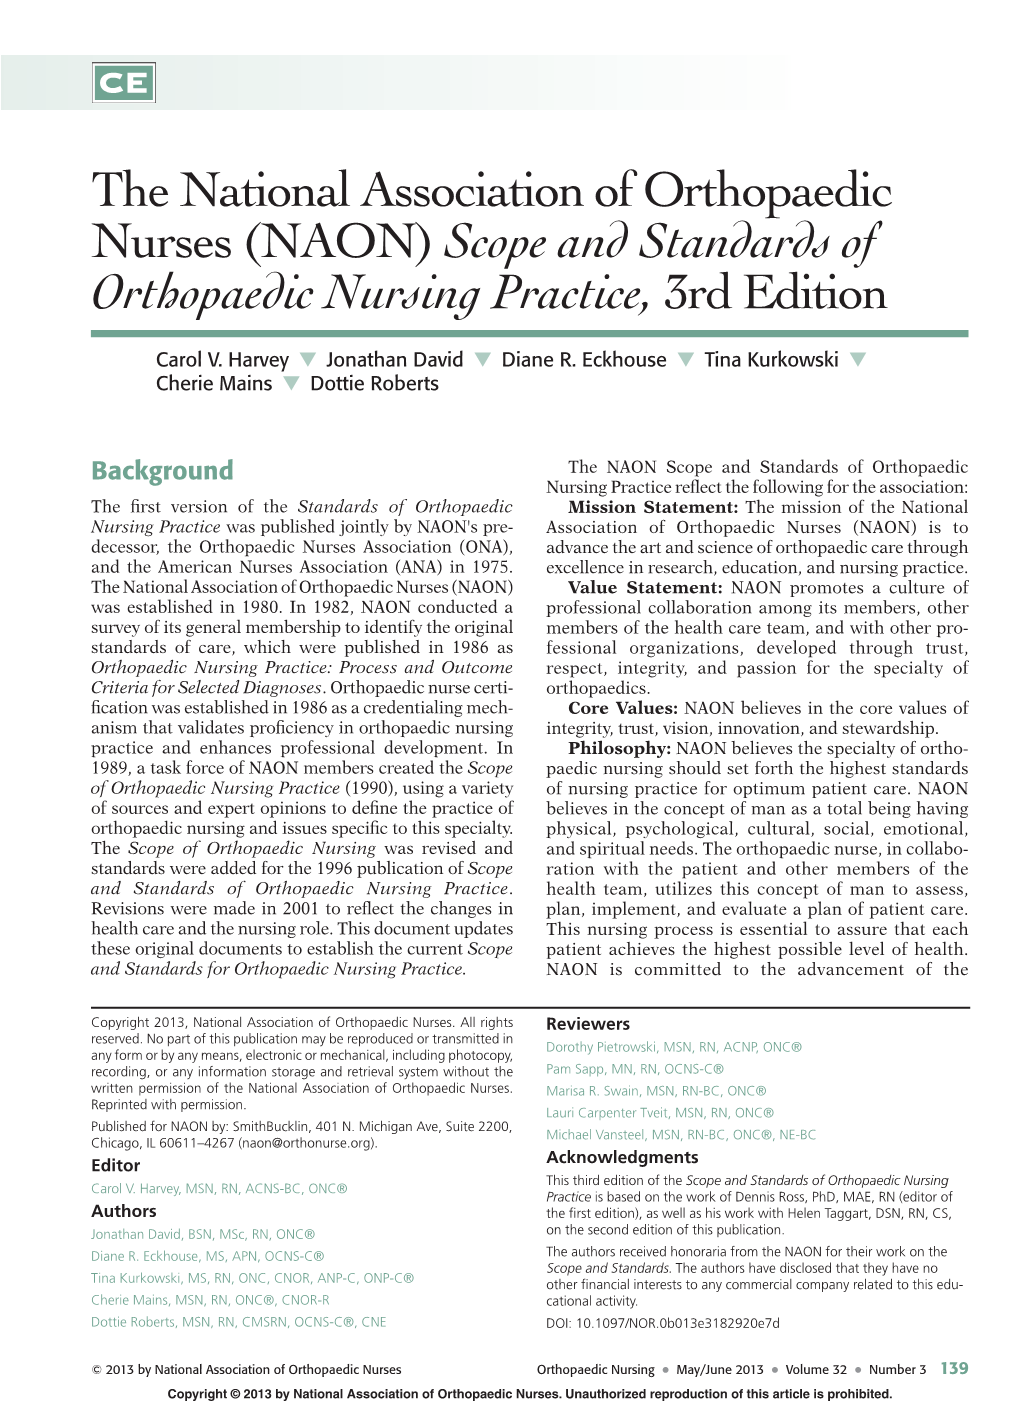 The National Association of Orthopaedic Nurses (NAON) Scope and Standards of Orthopaedic Nursing Practice, 3Rd Edition